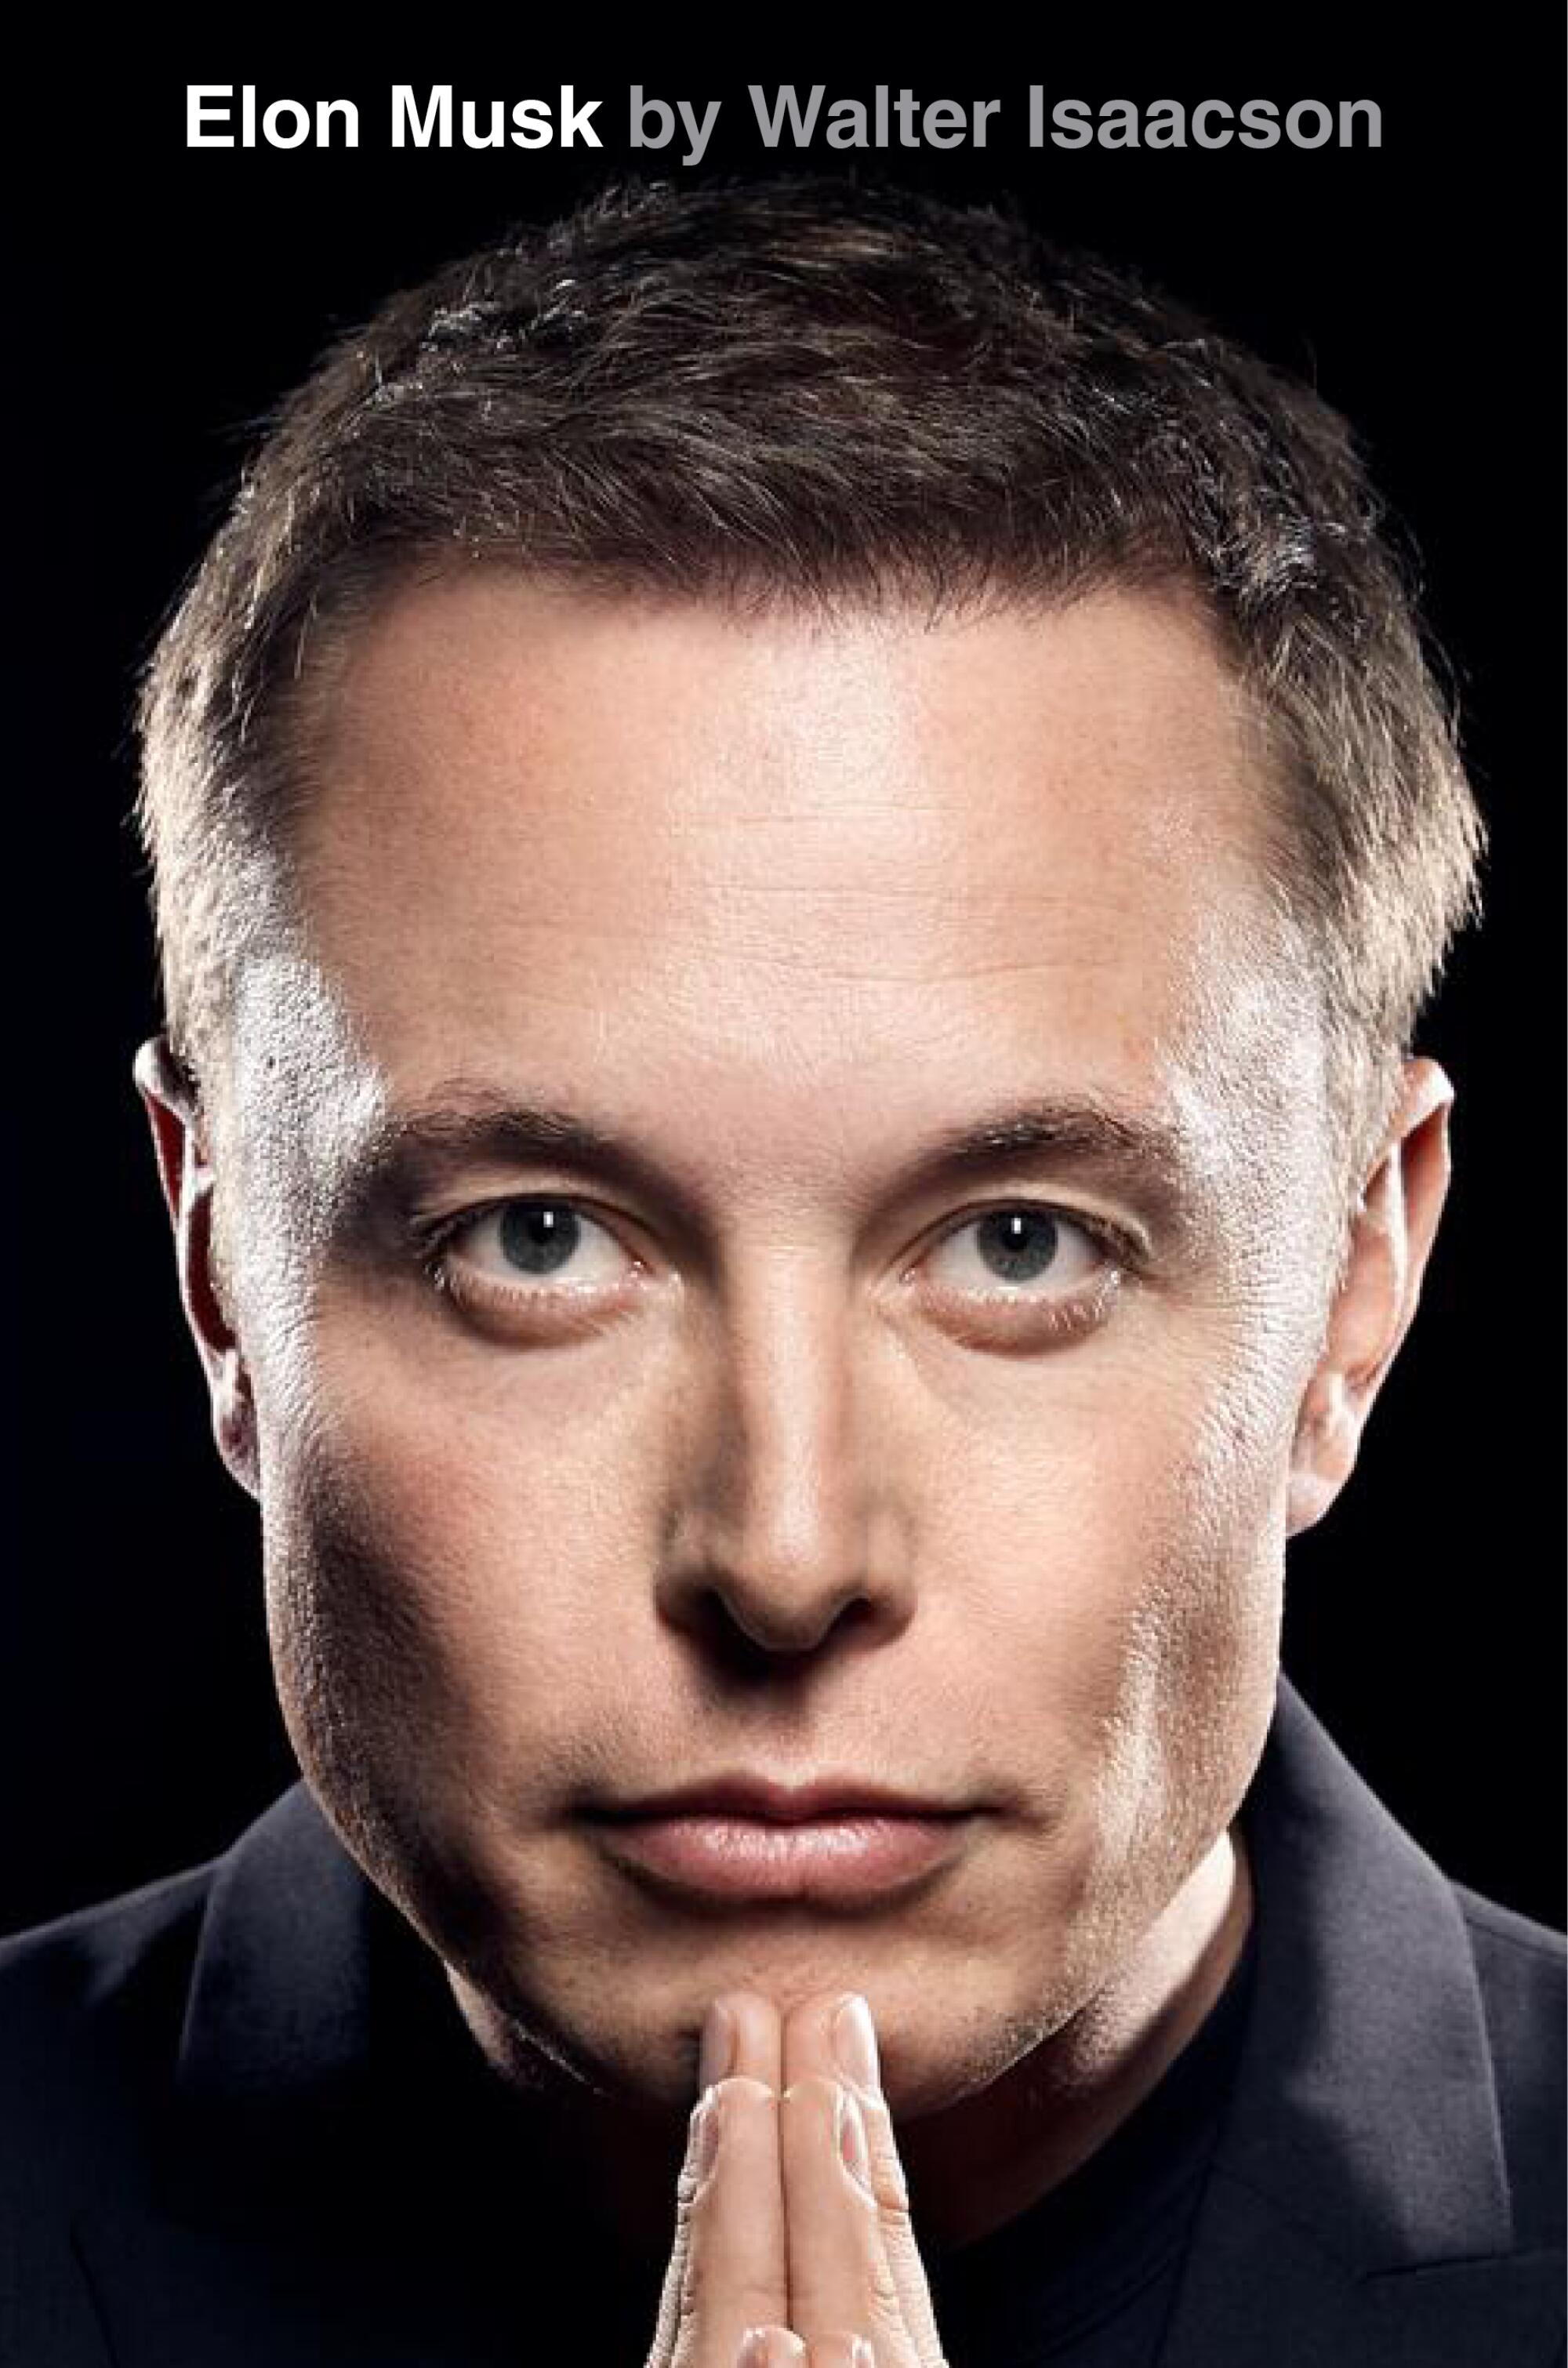 "Elon Musk," by Walter Isaacson